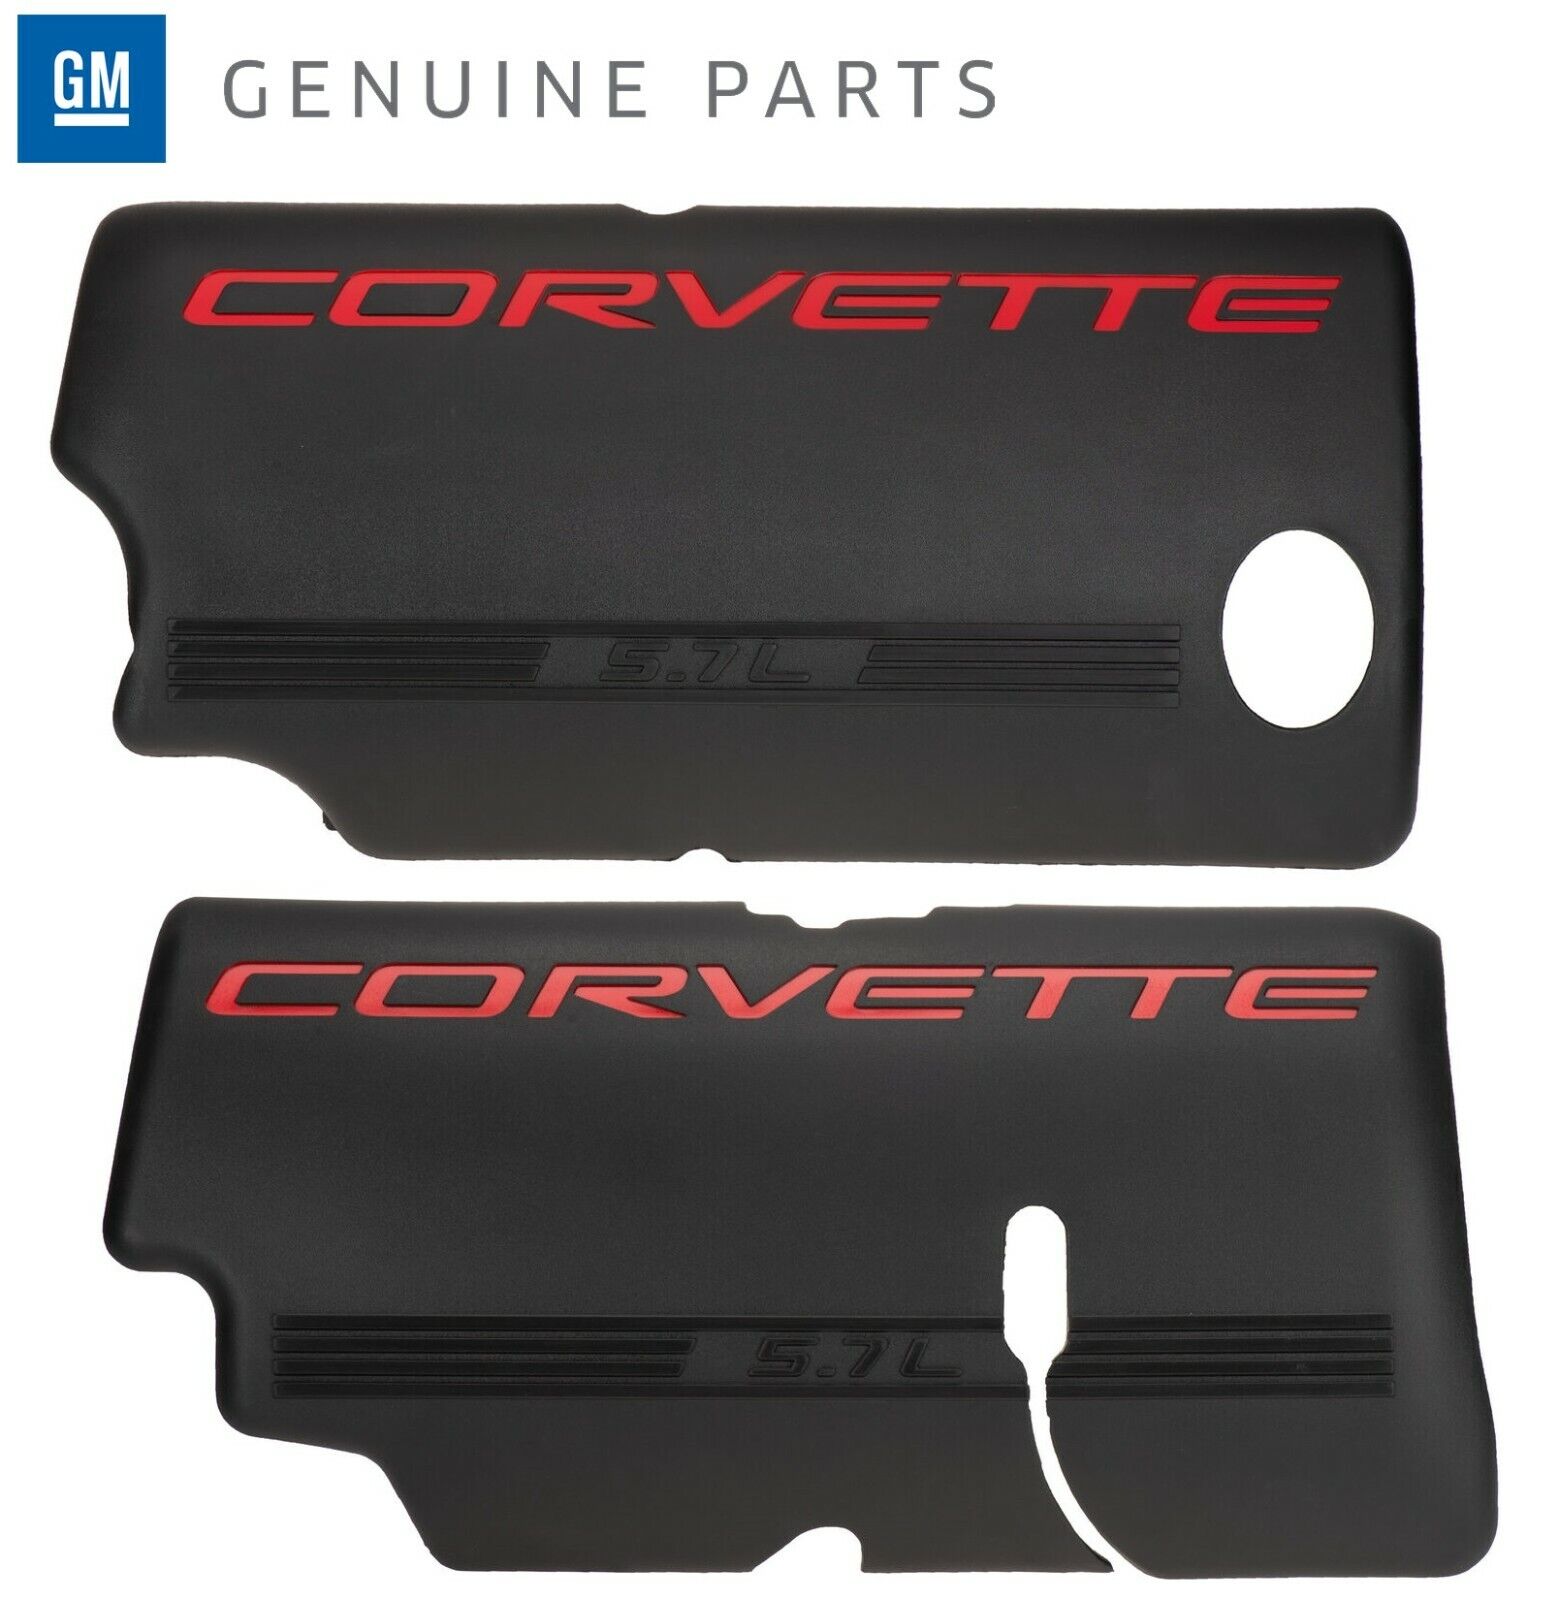 Genuine GM Engine Fuel Rail Covers Pair Black 1999-2004 Corvette C5 Z06 LS1 LS6